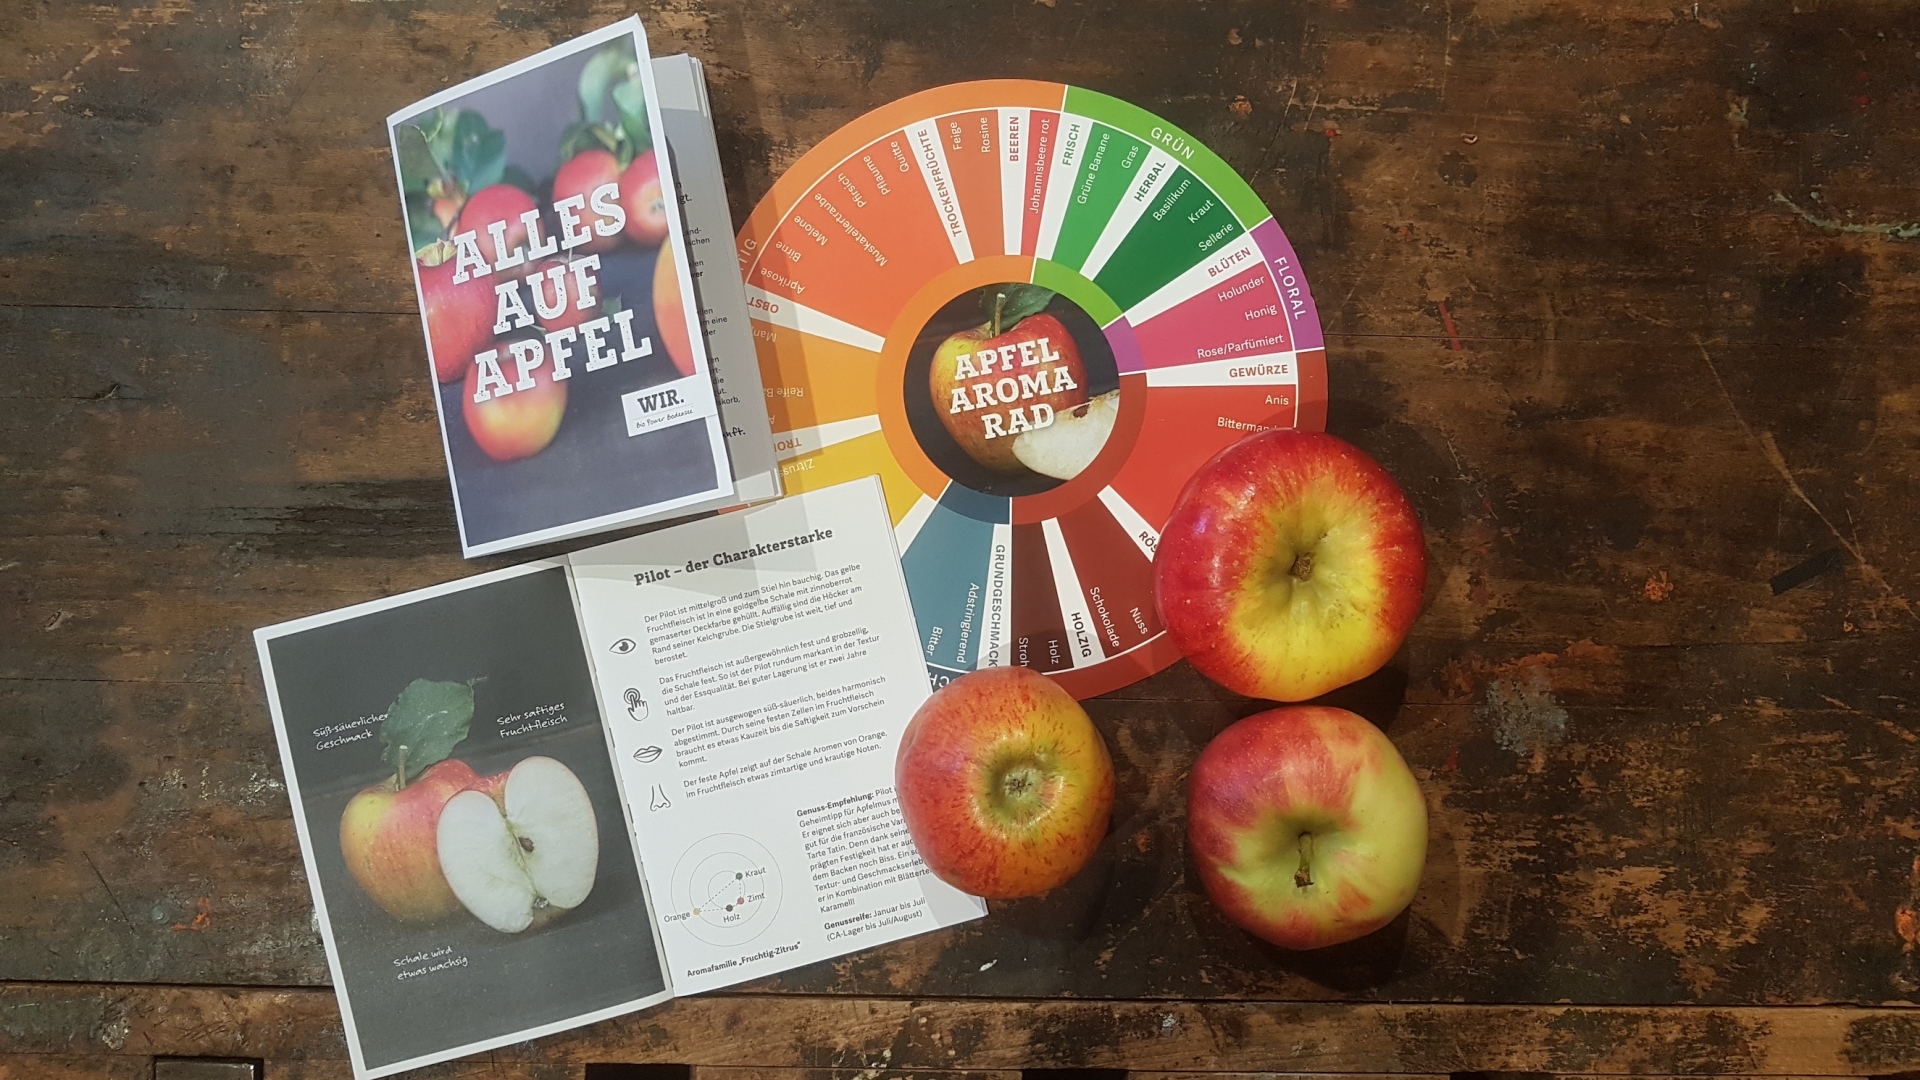 Flavors and sensory - Apple aroma wheel